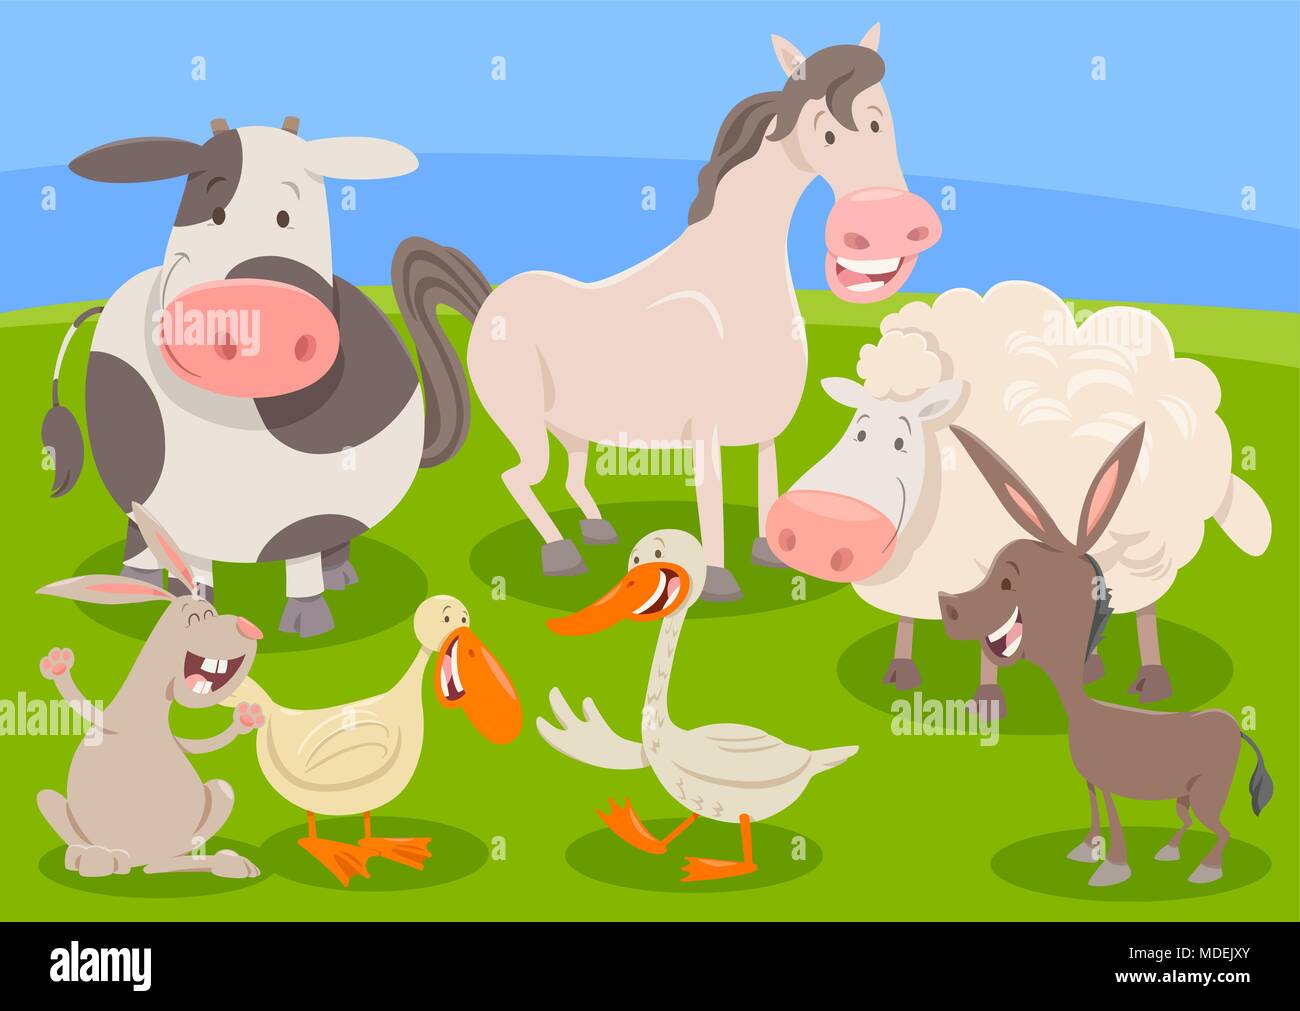 Cartoon Illustration of Funny Farm Animals Characters Group Stock Vector